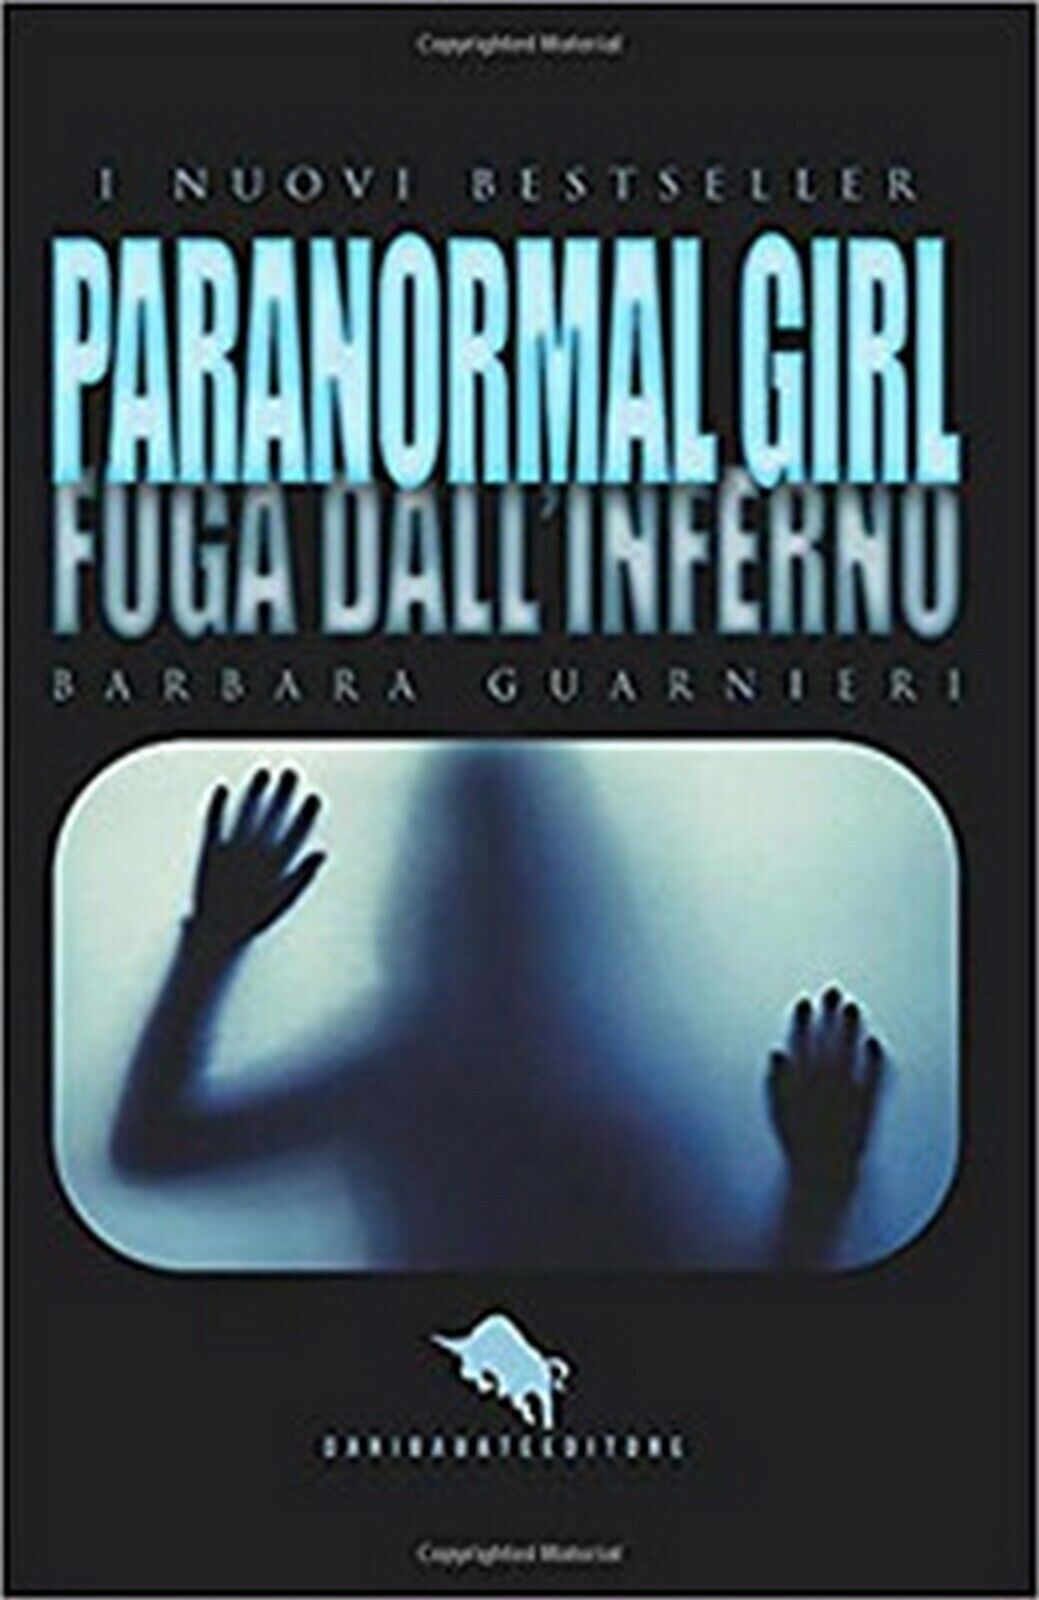 Paranormal girl. Fuga dalL'inferno  di Barbara Guarnieri,  2019,  How2